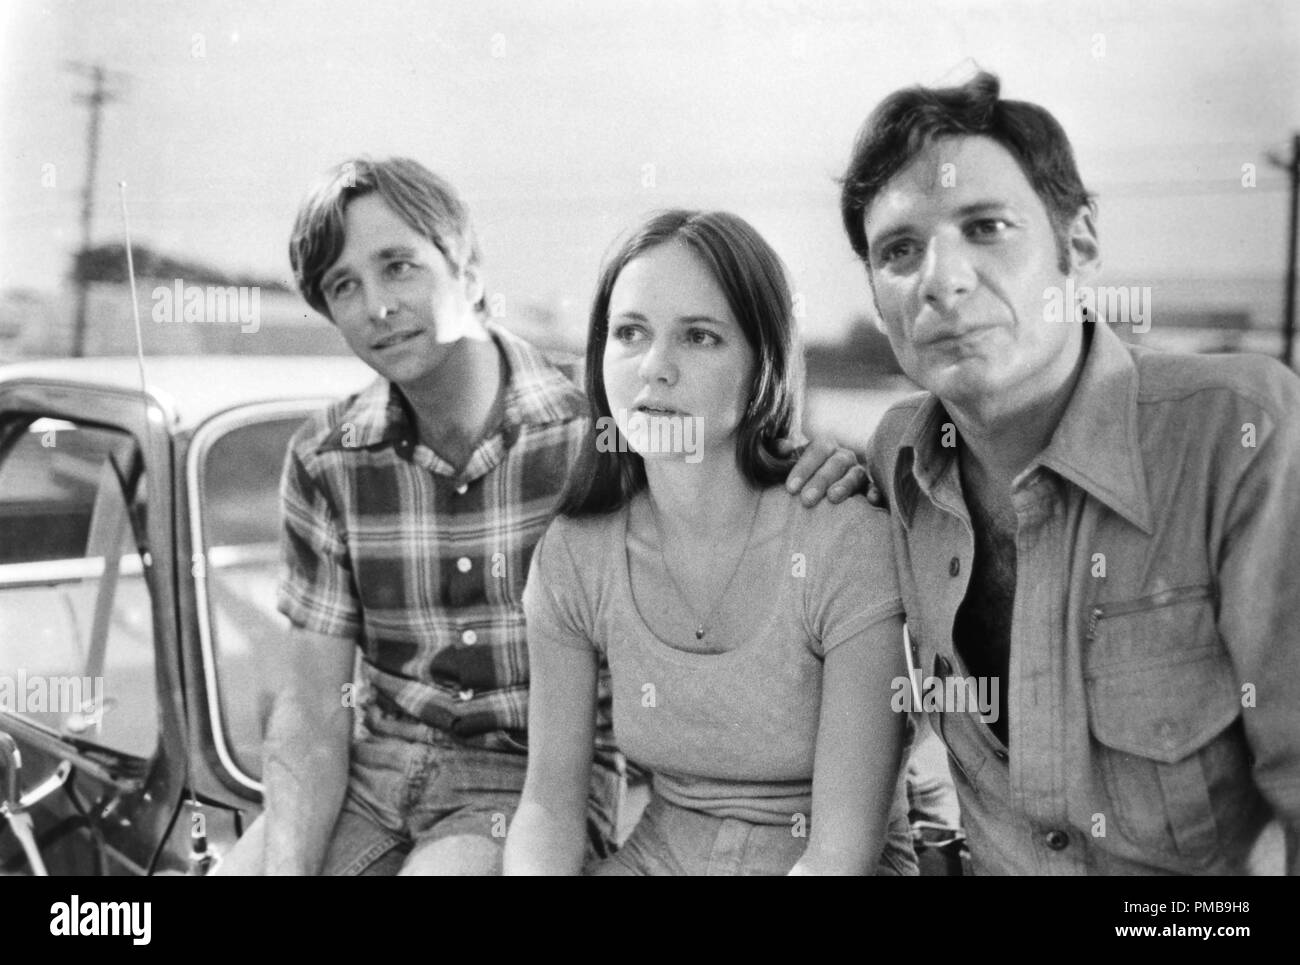 Beau Bridges, Sally Field, Ron Leibman, "Norma Rae', 1979 XX Century Fox Riferimento File # 32557 798THA Foto Stock